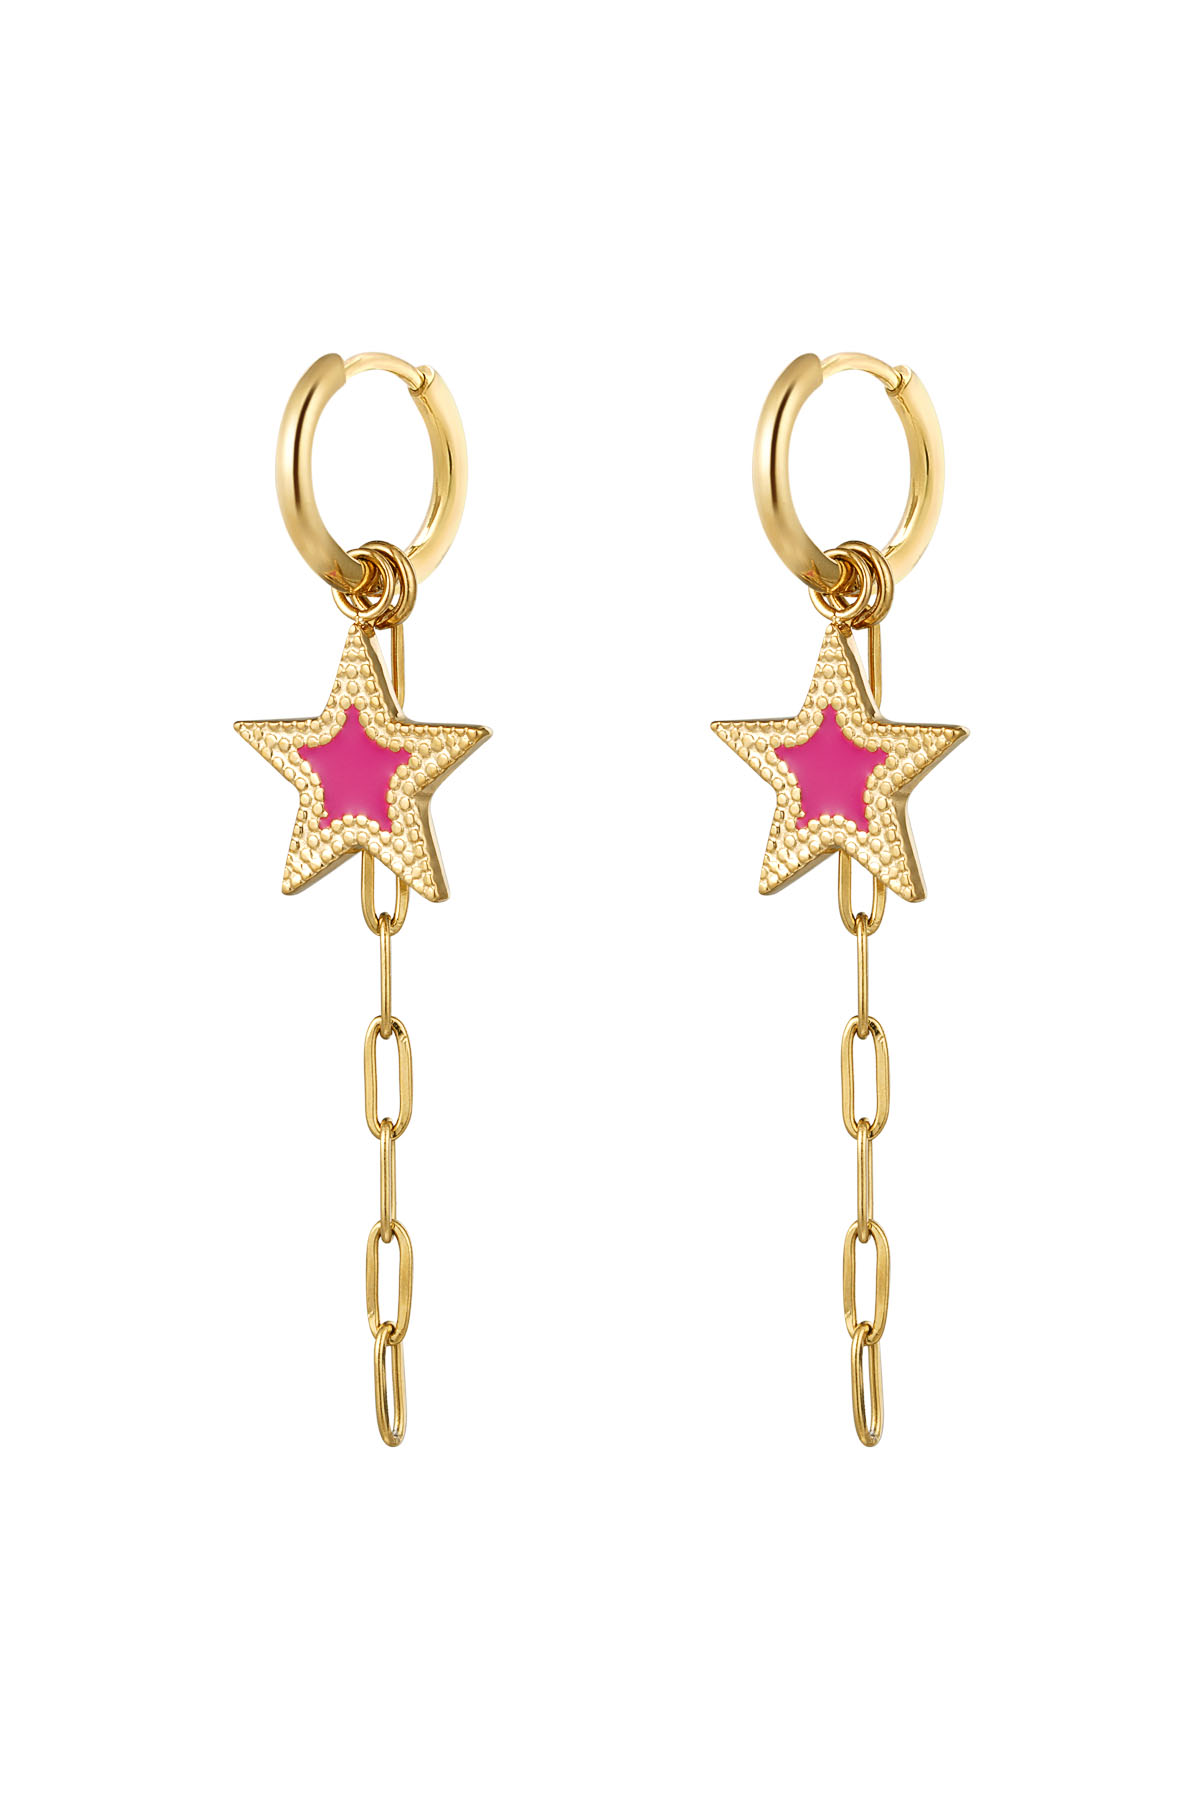 oorbellen met ster en ketting roze - goud